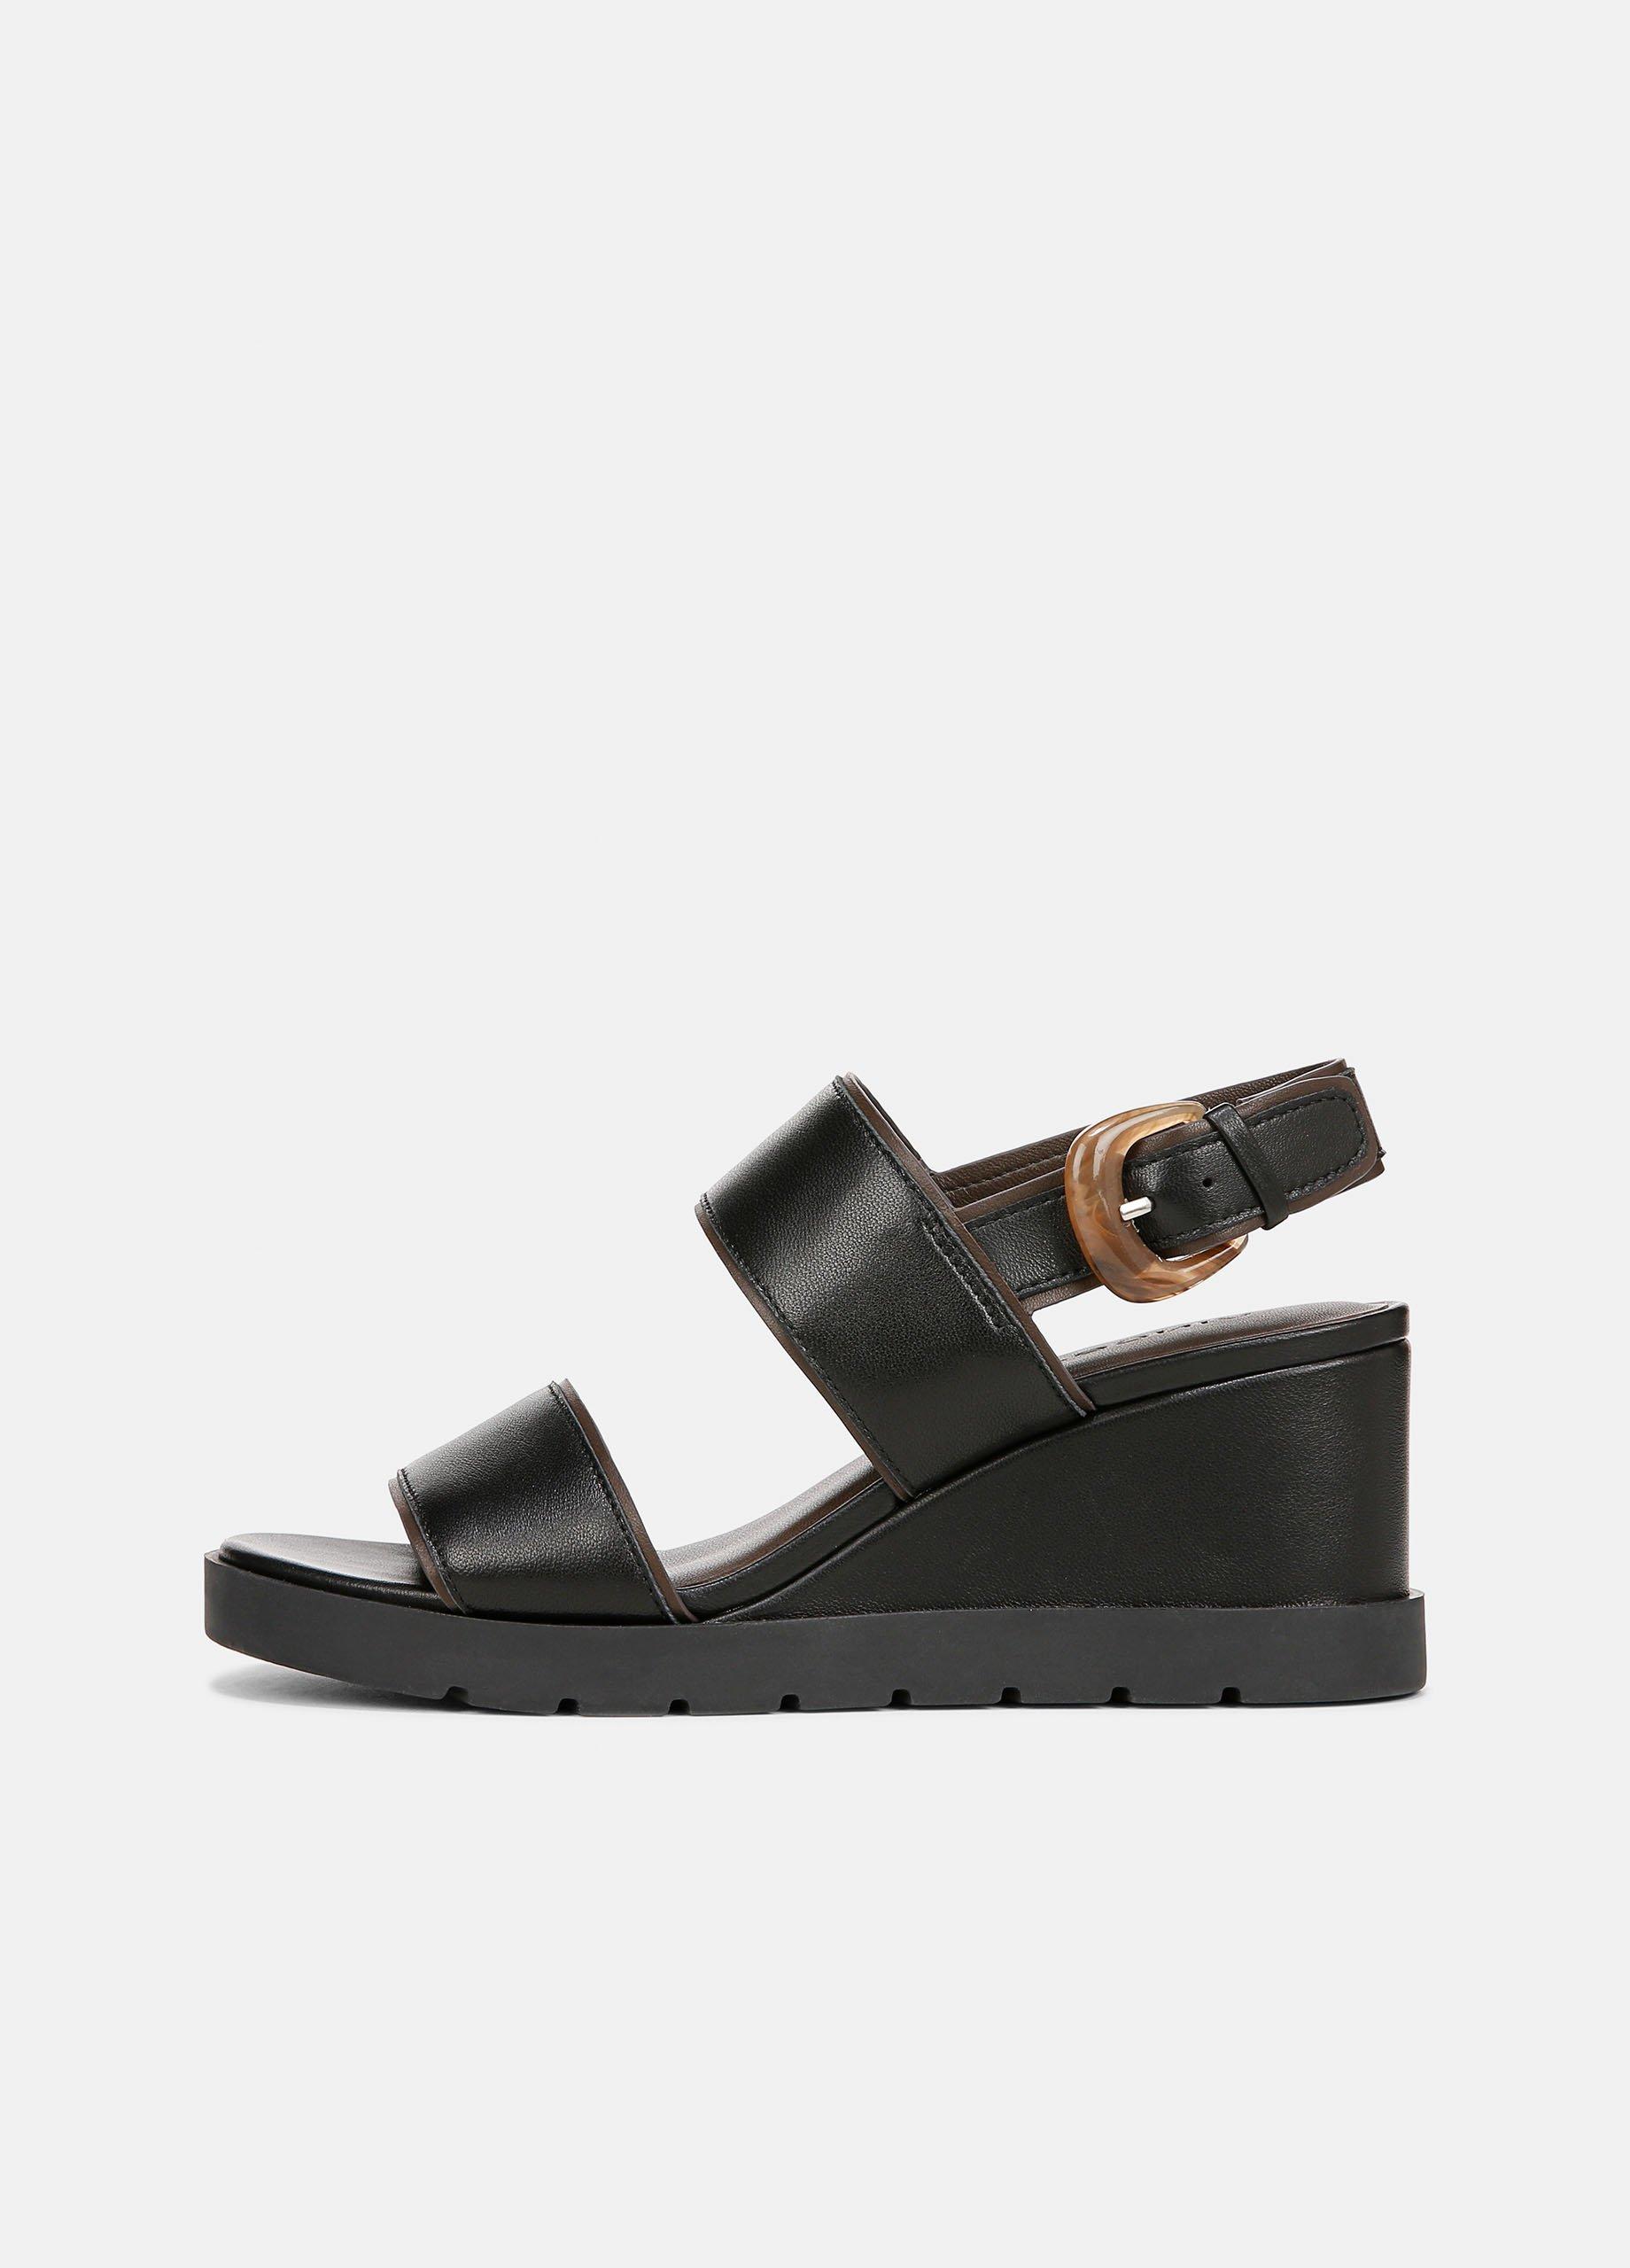 Roma Leather Wedge Sandal, Black, Size 5.5 Vince